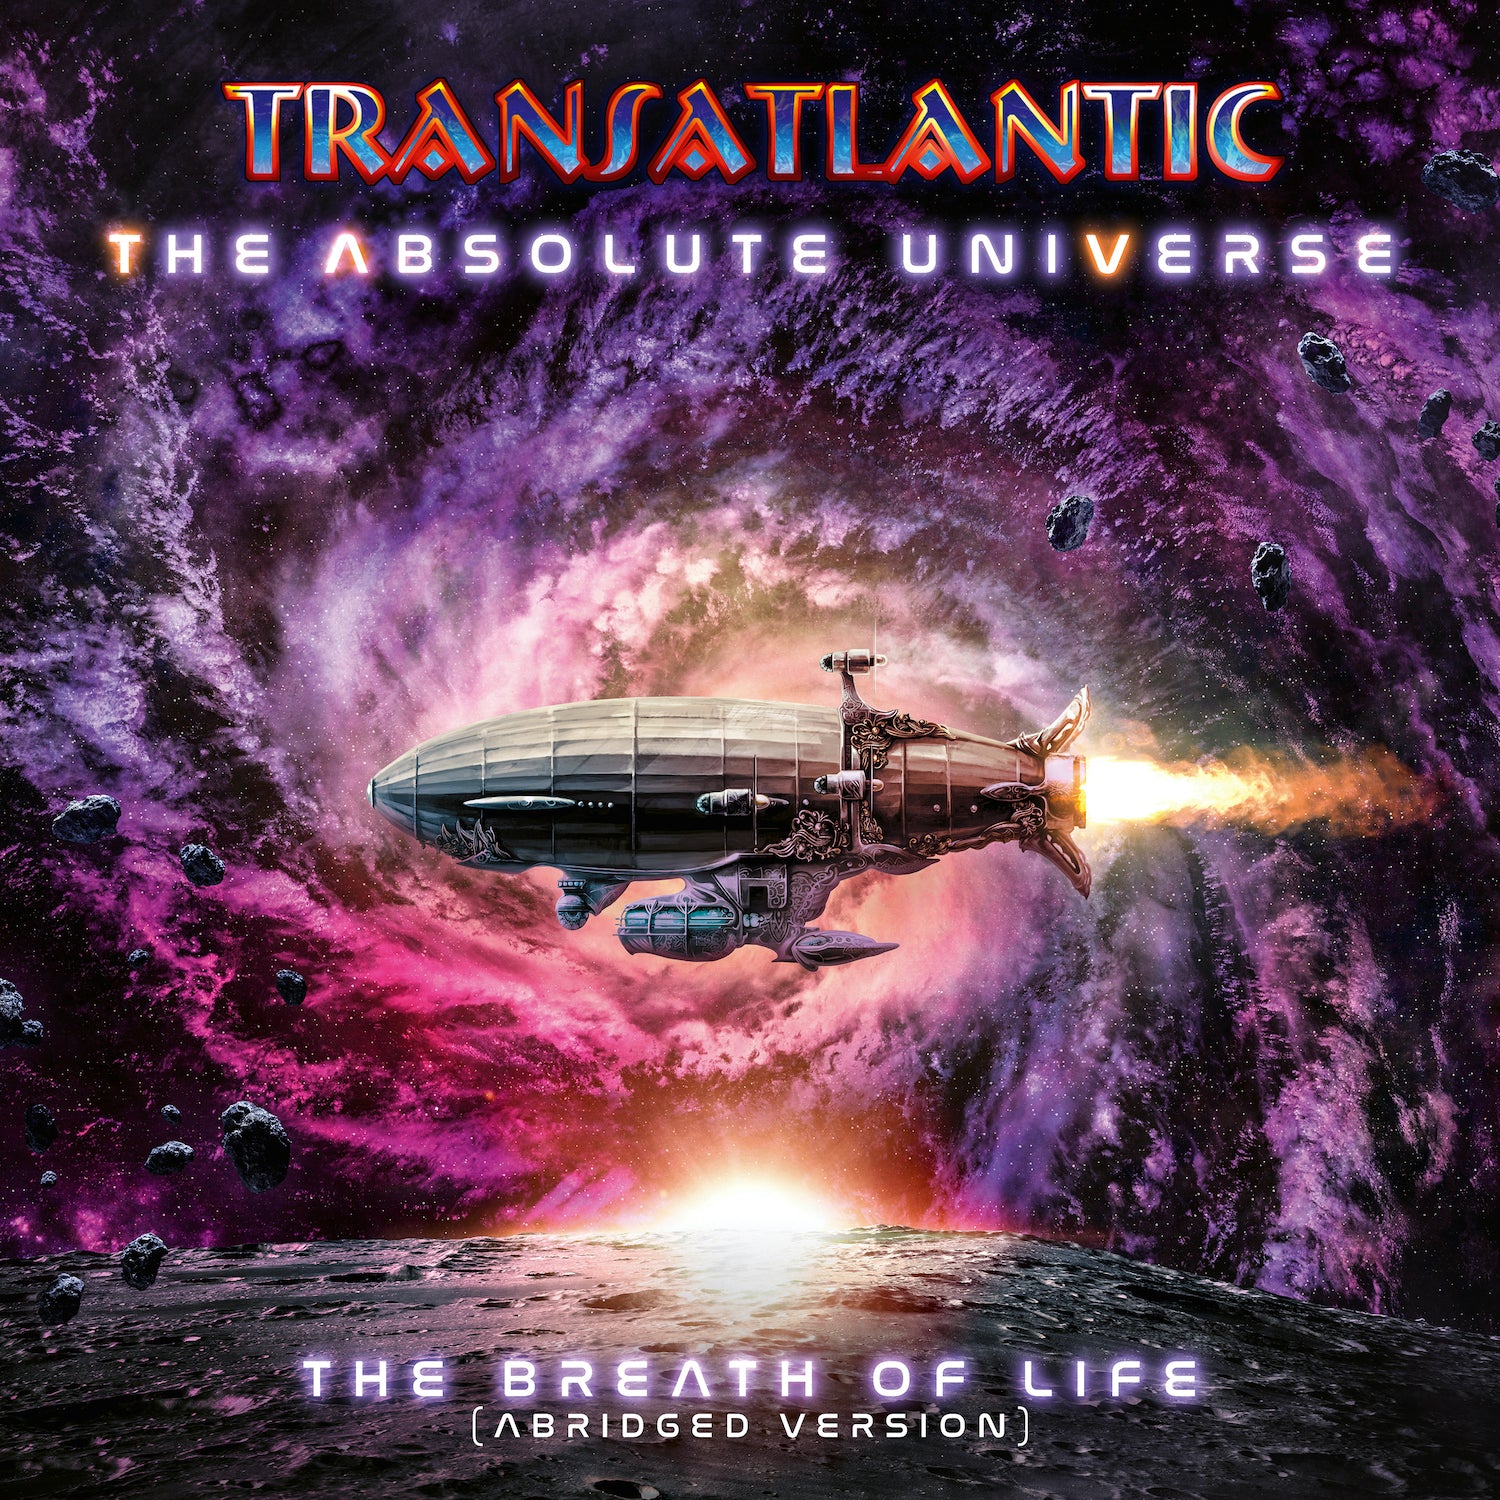 Transatlantic - The Absolute Universe: The Breath Of Life (Abridged Version) (CD) (InsideOutMusic)